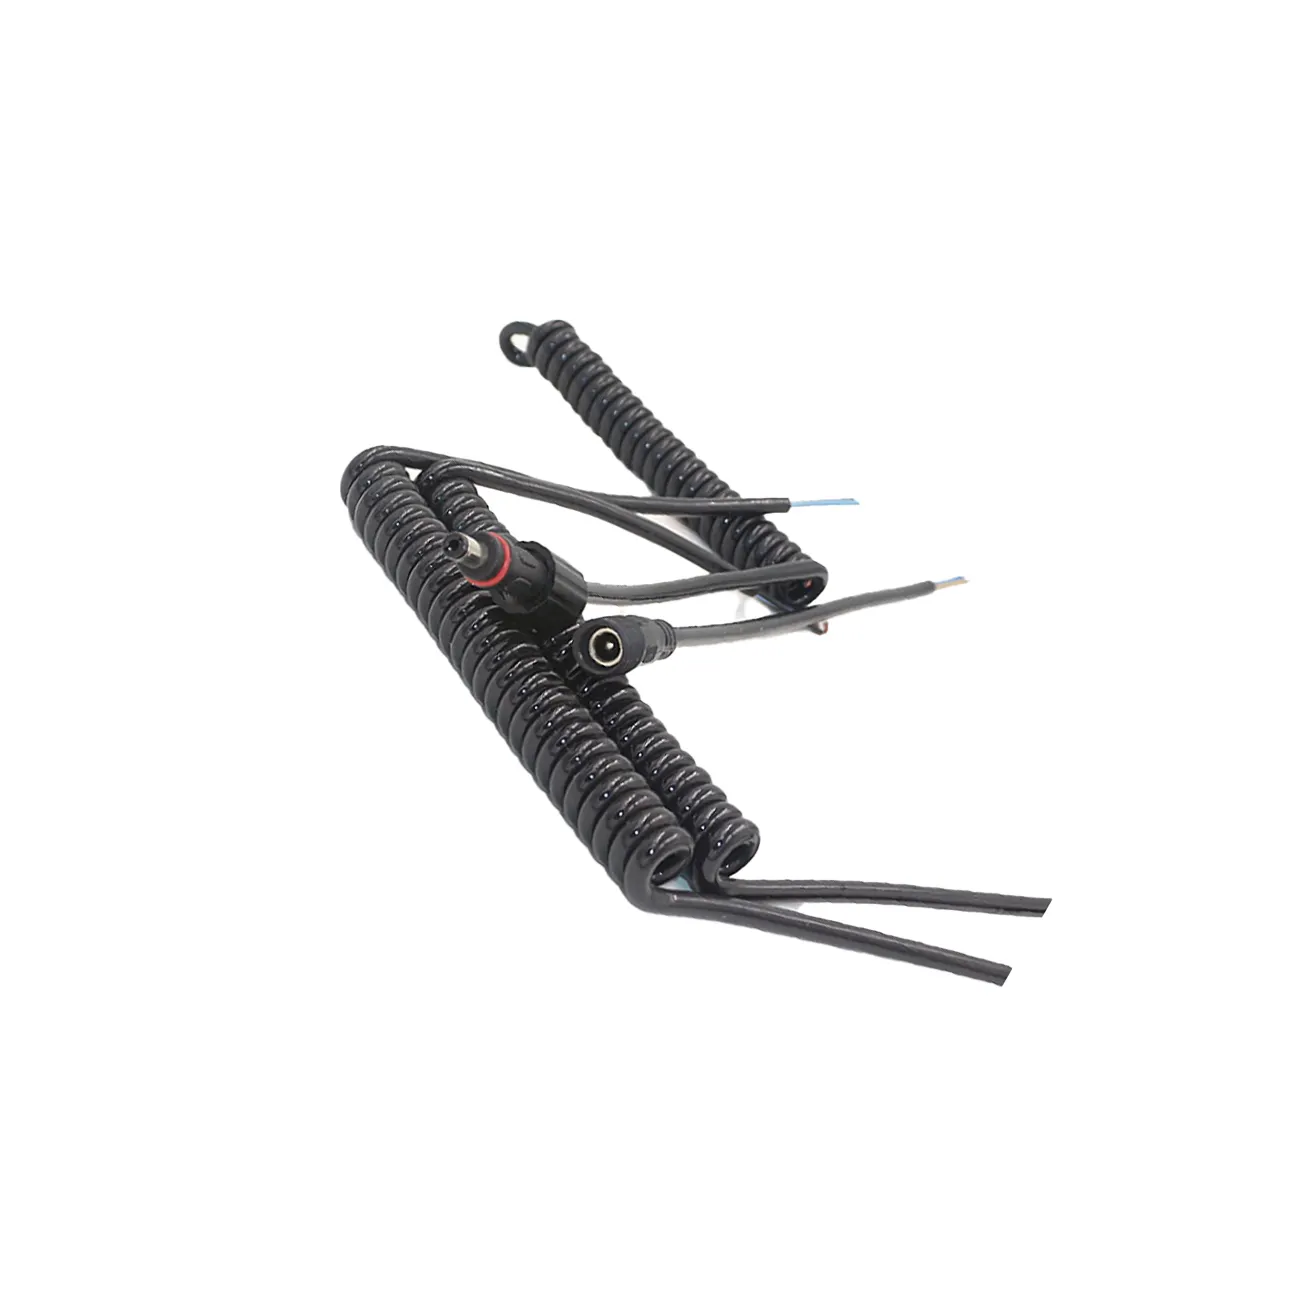 M12 Mini 4-Core impermeable Cable de pesaje sensor de presión impermeable Cable de conexión al aire libre impermeable macho y hembra enchufe